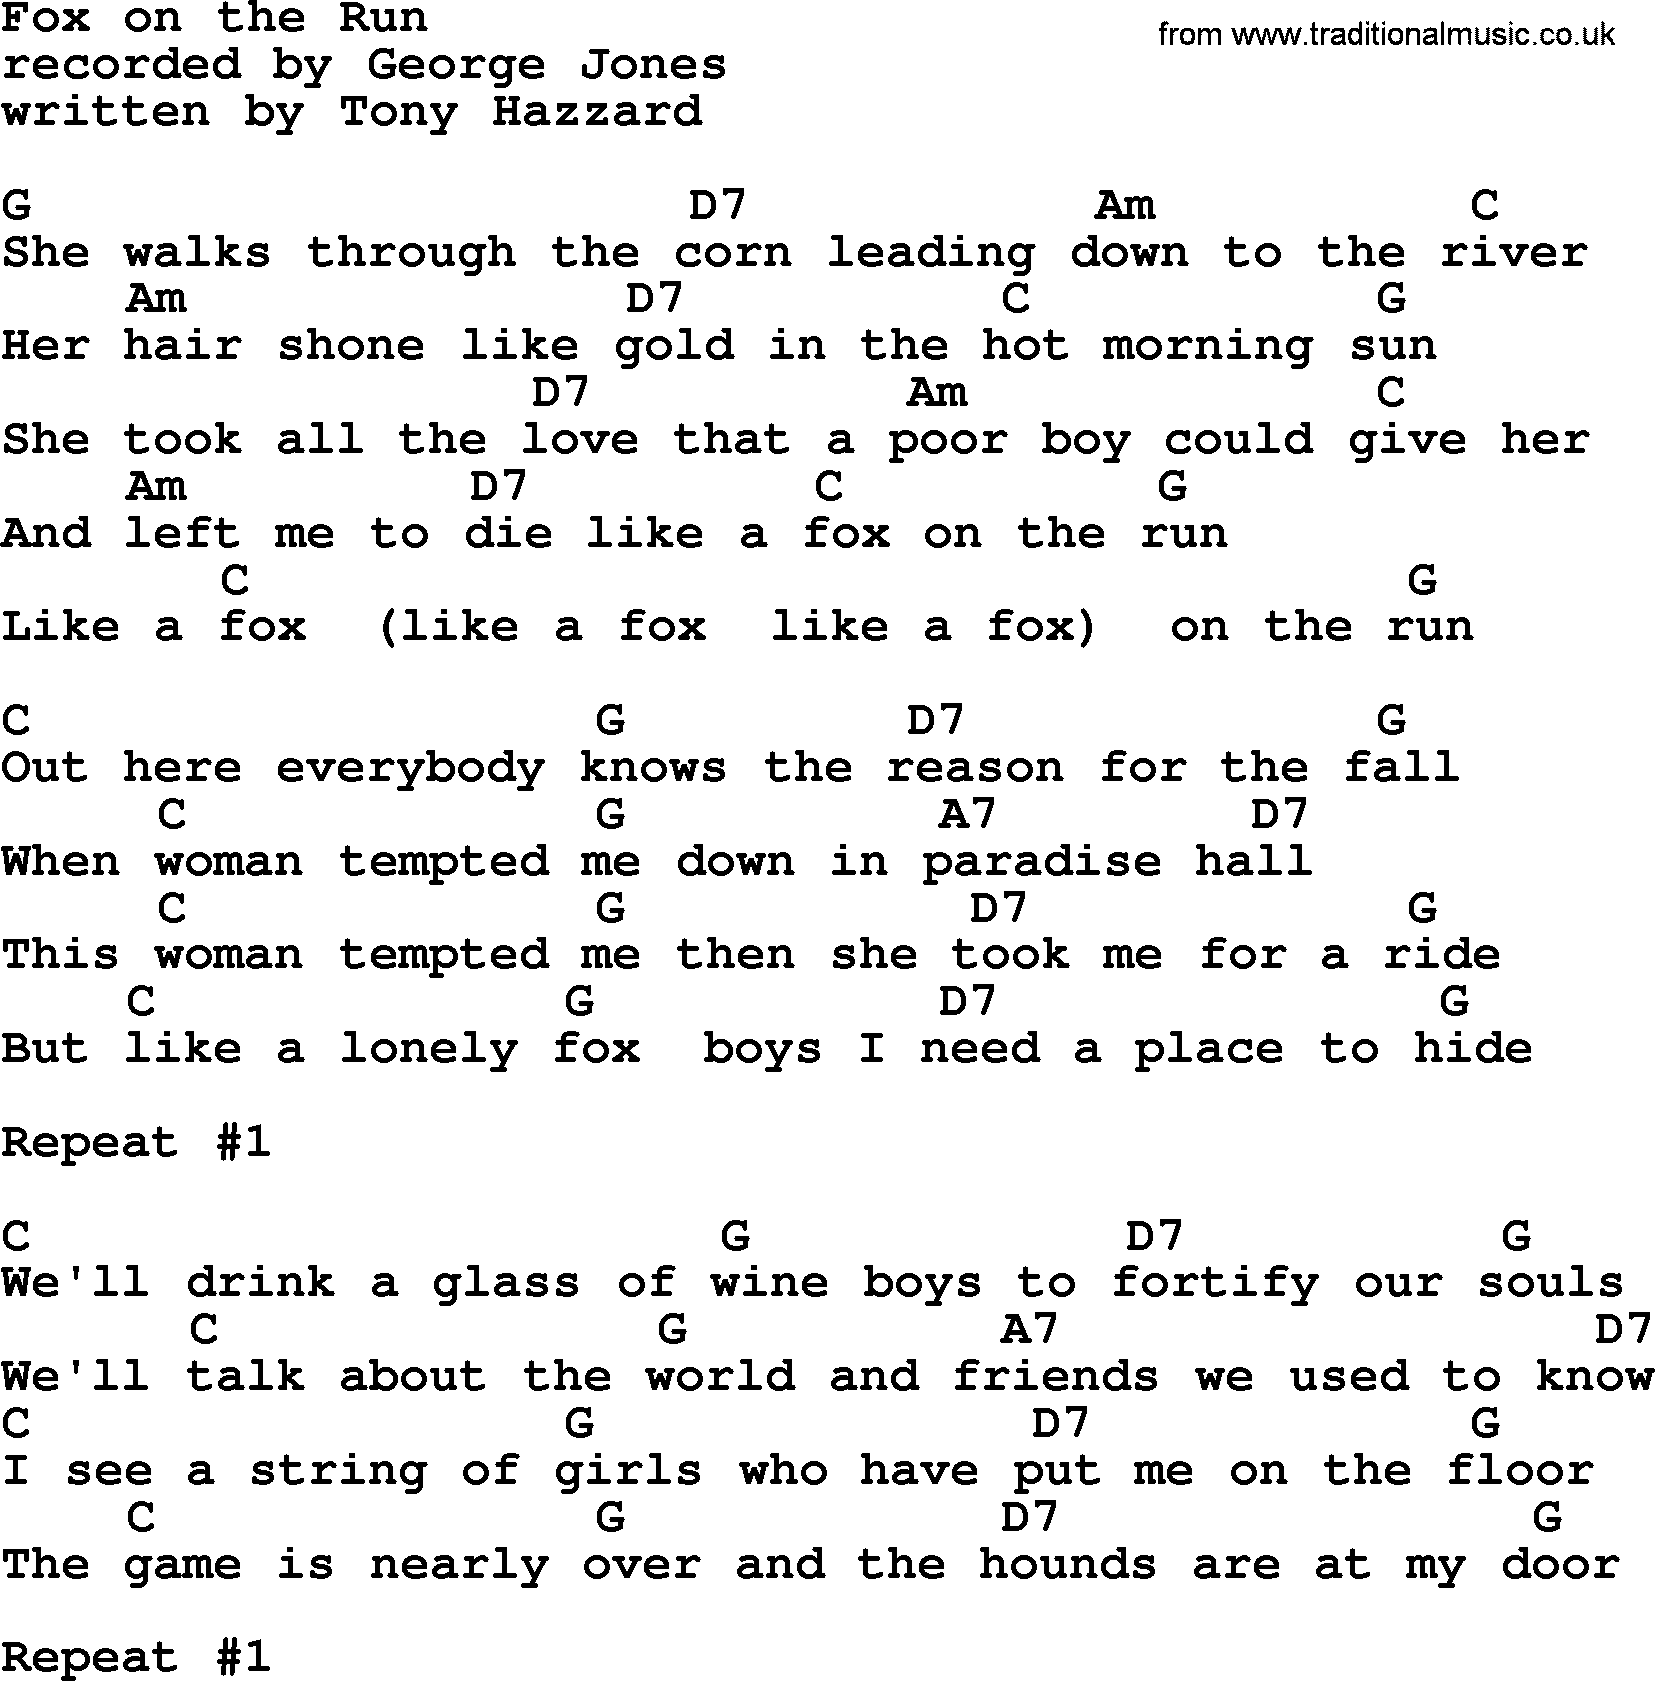 George Jones song: Fox On The Run, lyrics and chords